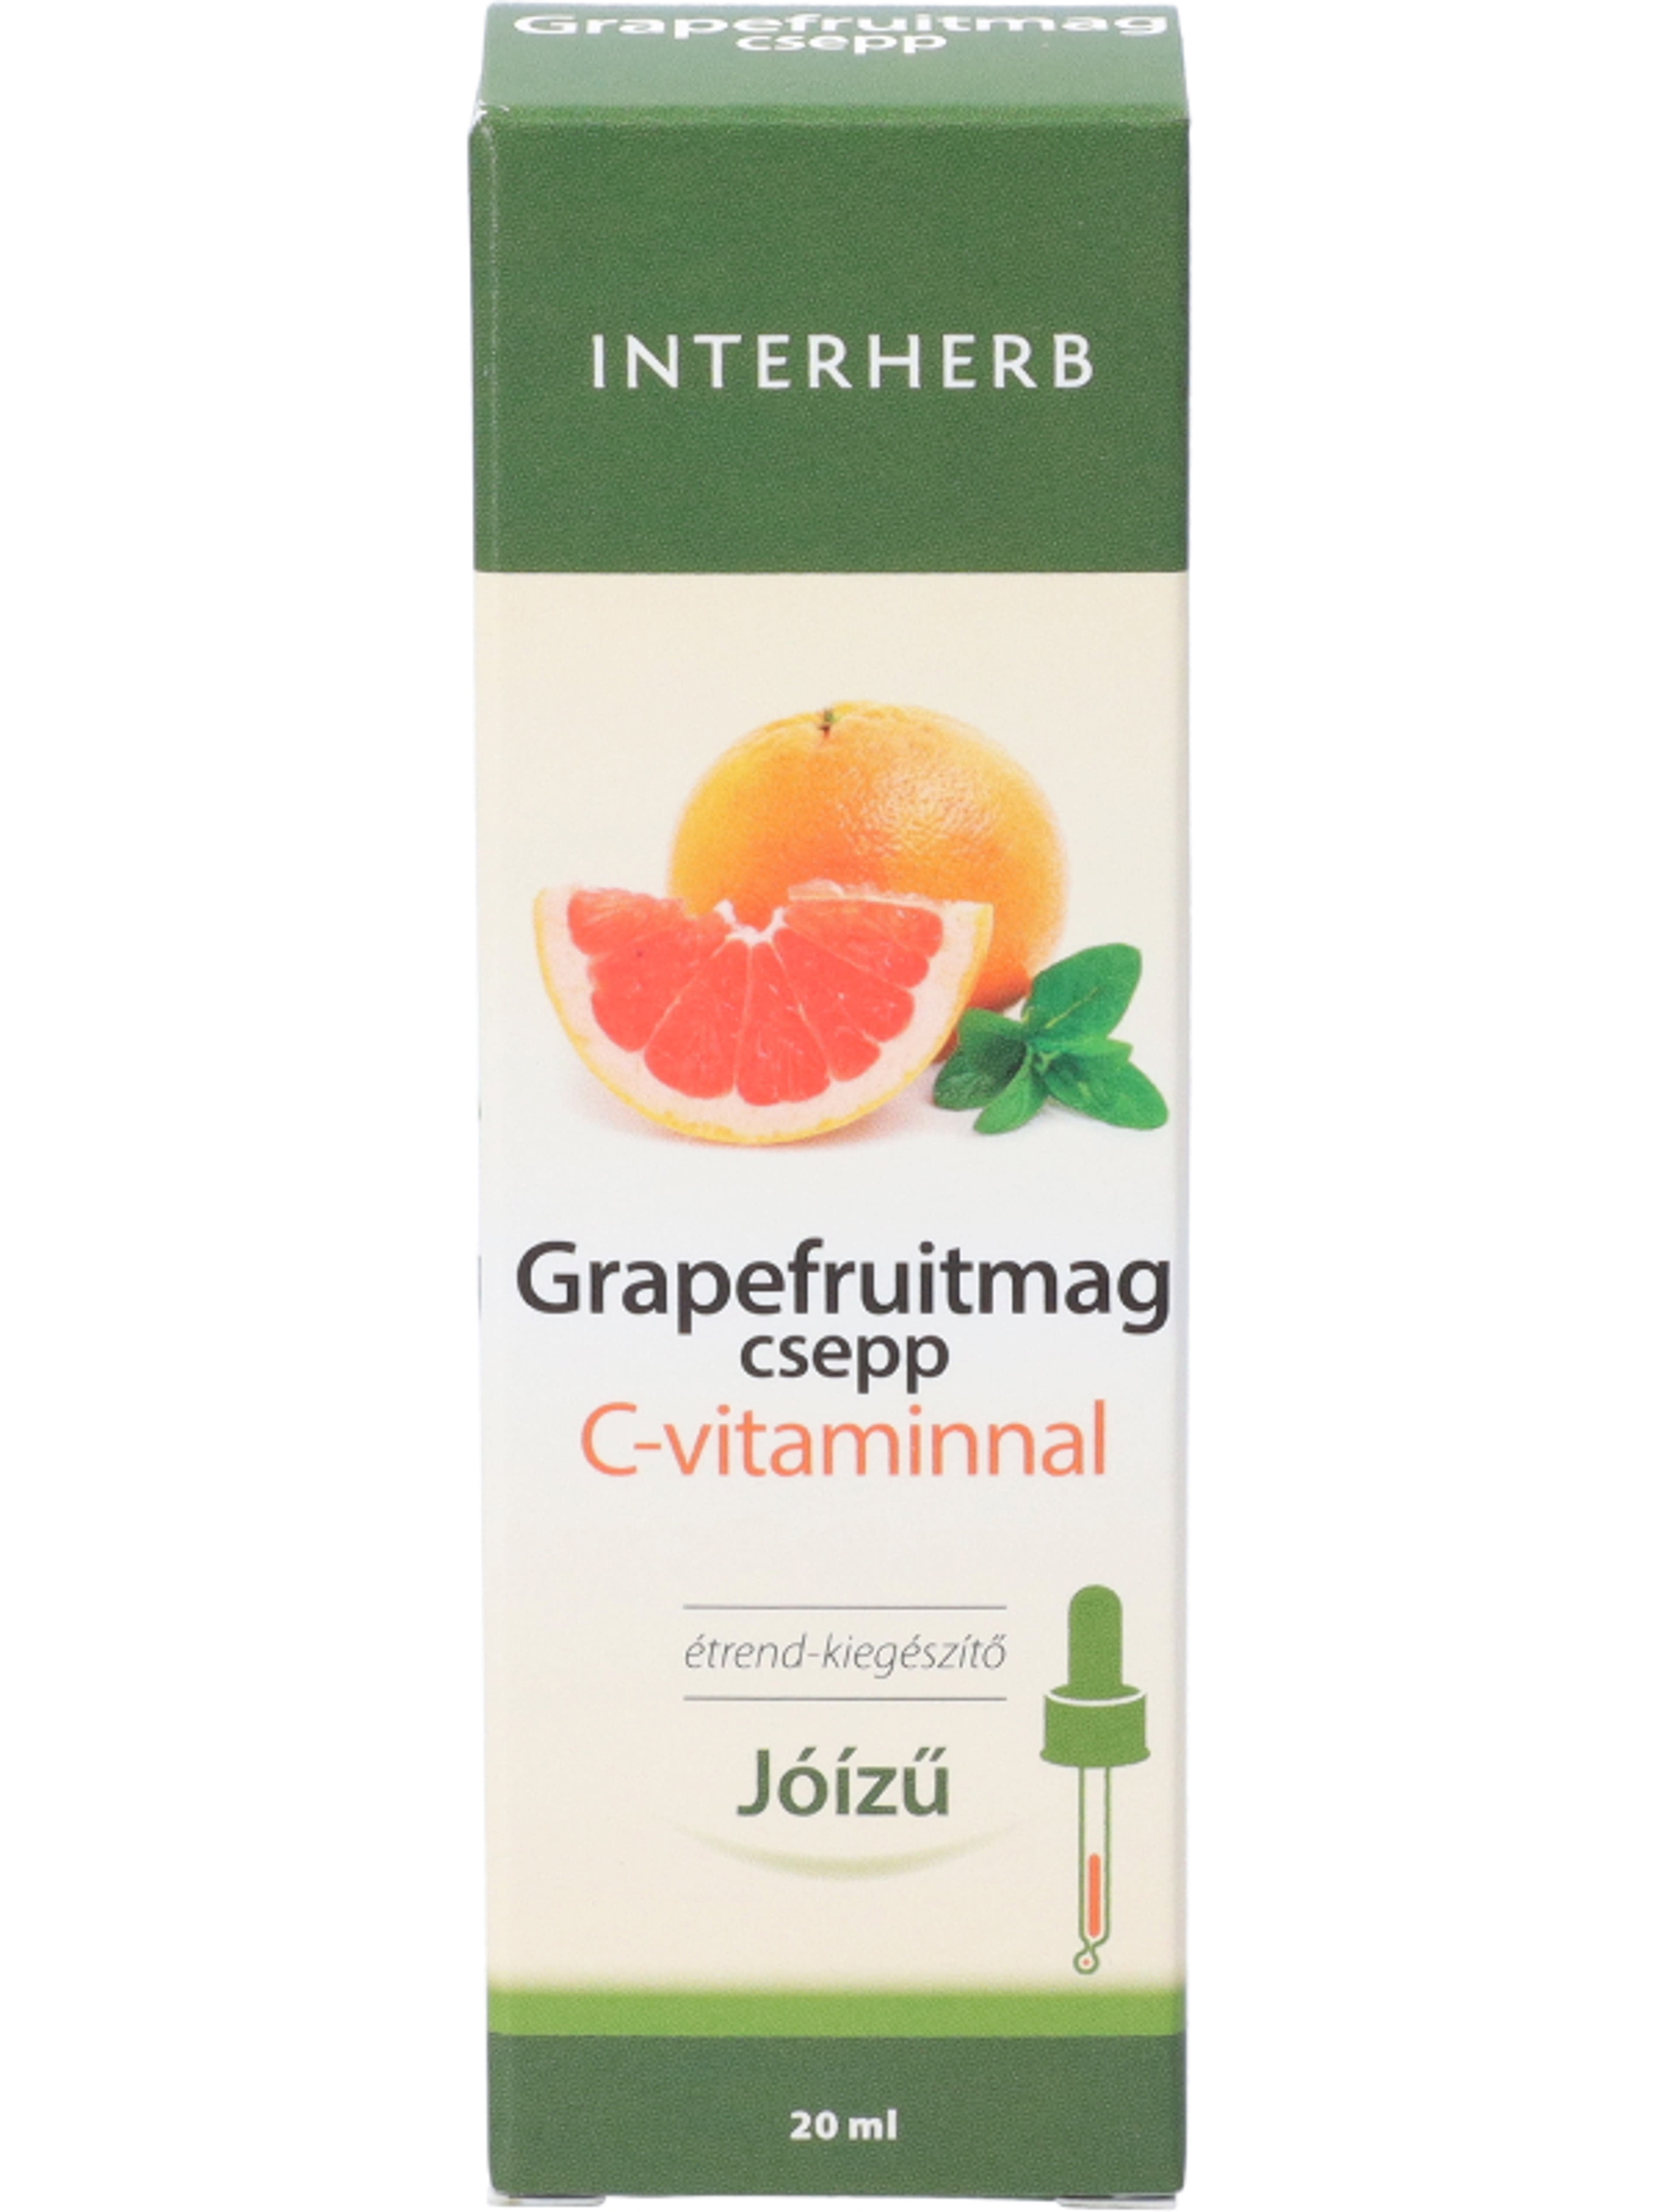 Interherb Grapefruitmag C-Vitaminnal Csepp - 20 ml-1